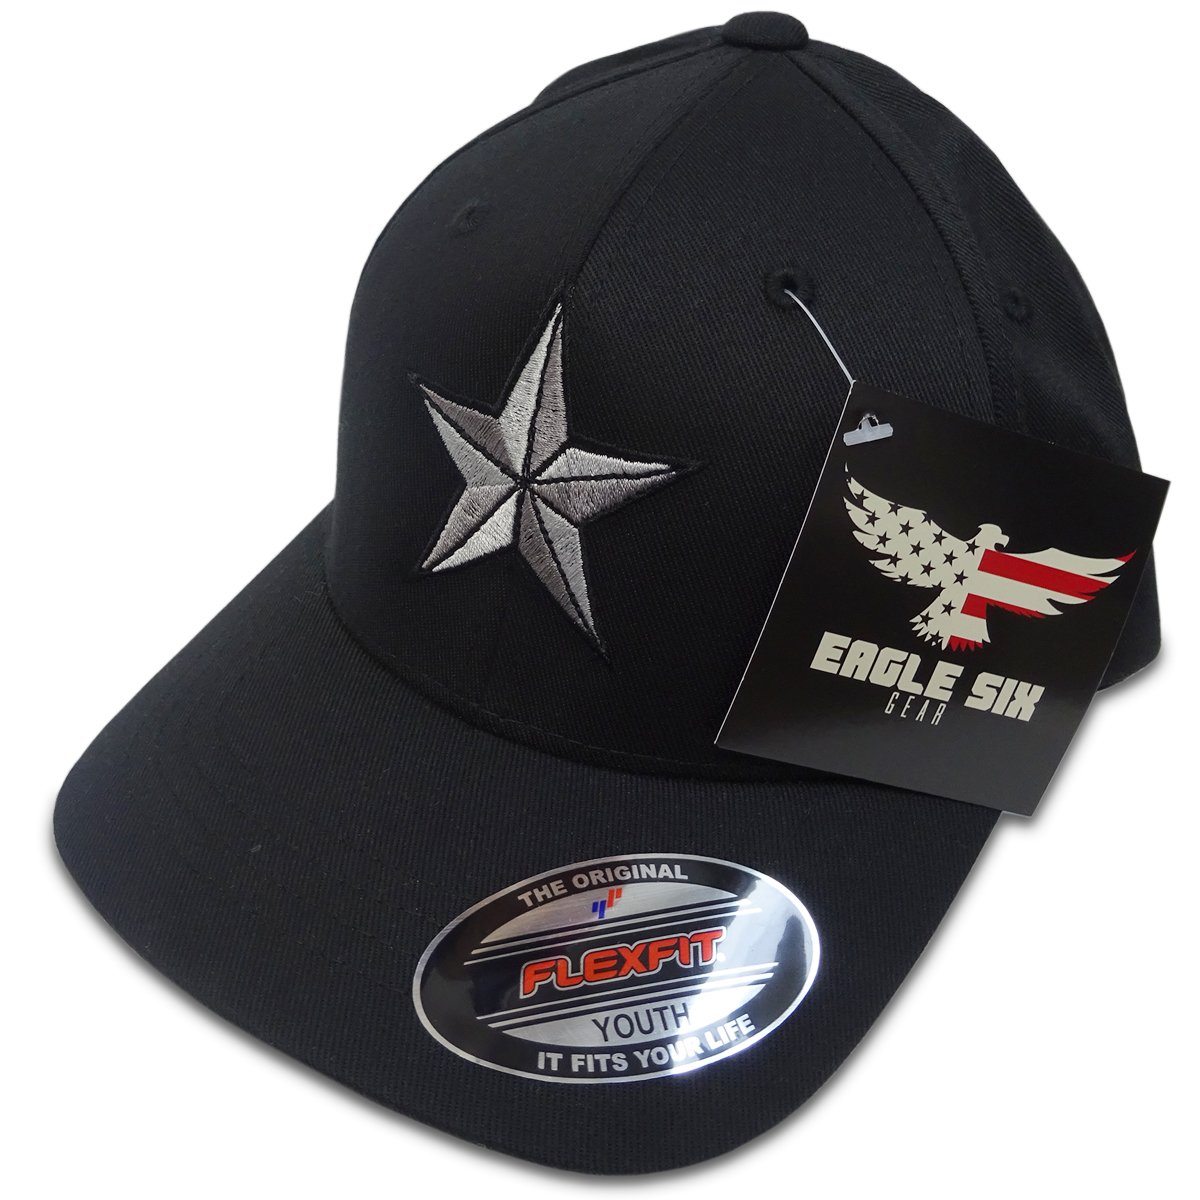 The Patriot Star Hat